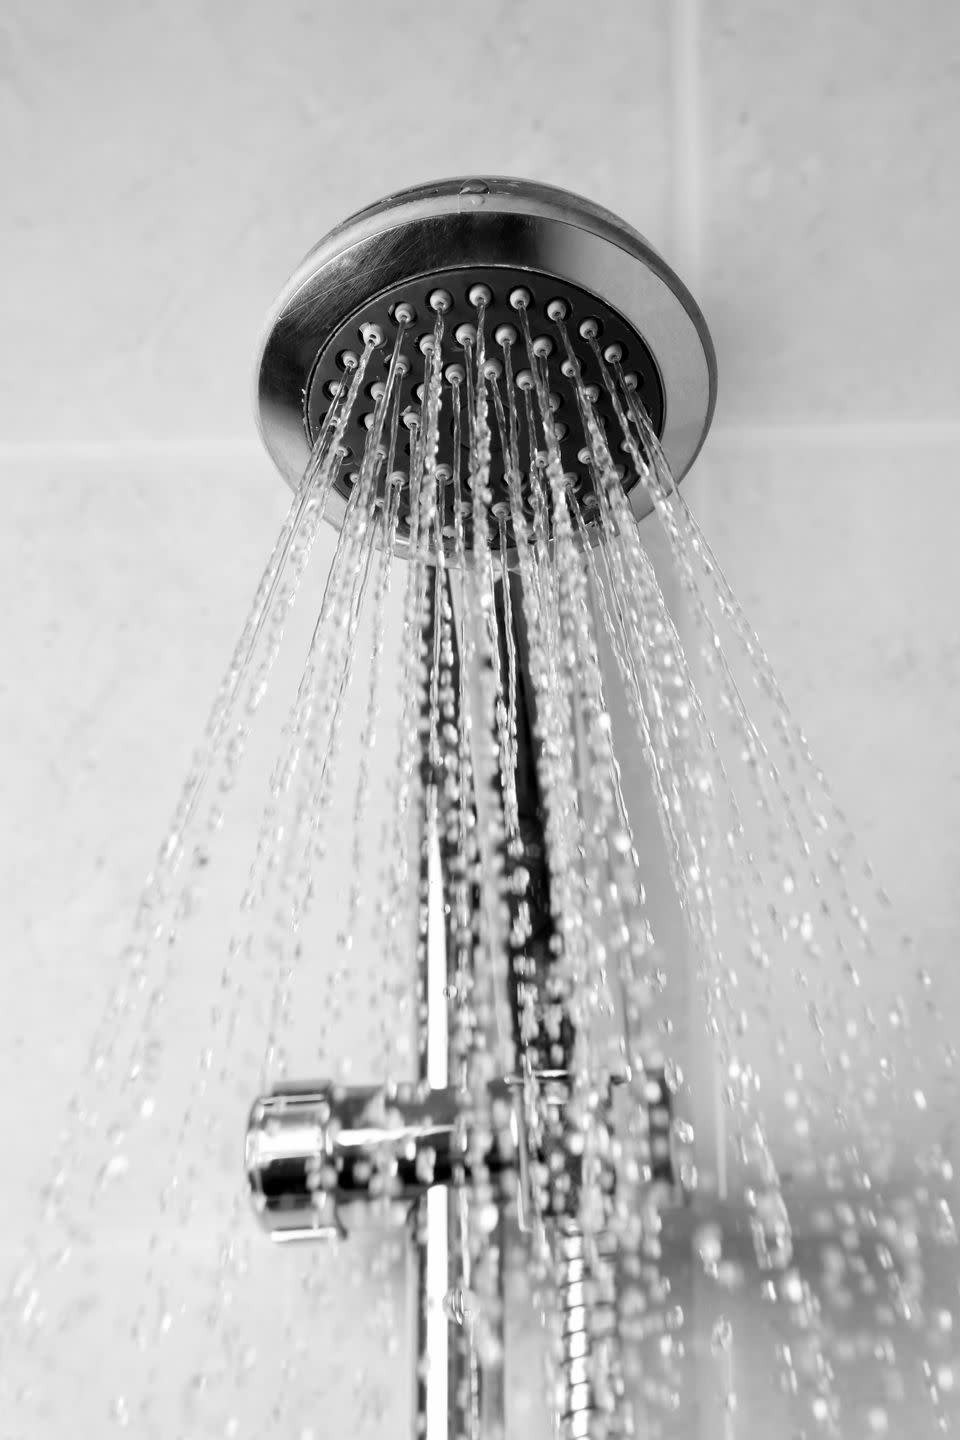 Restore your shower pressure.